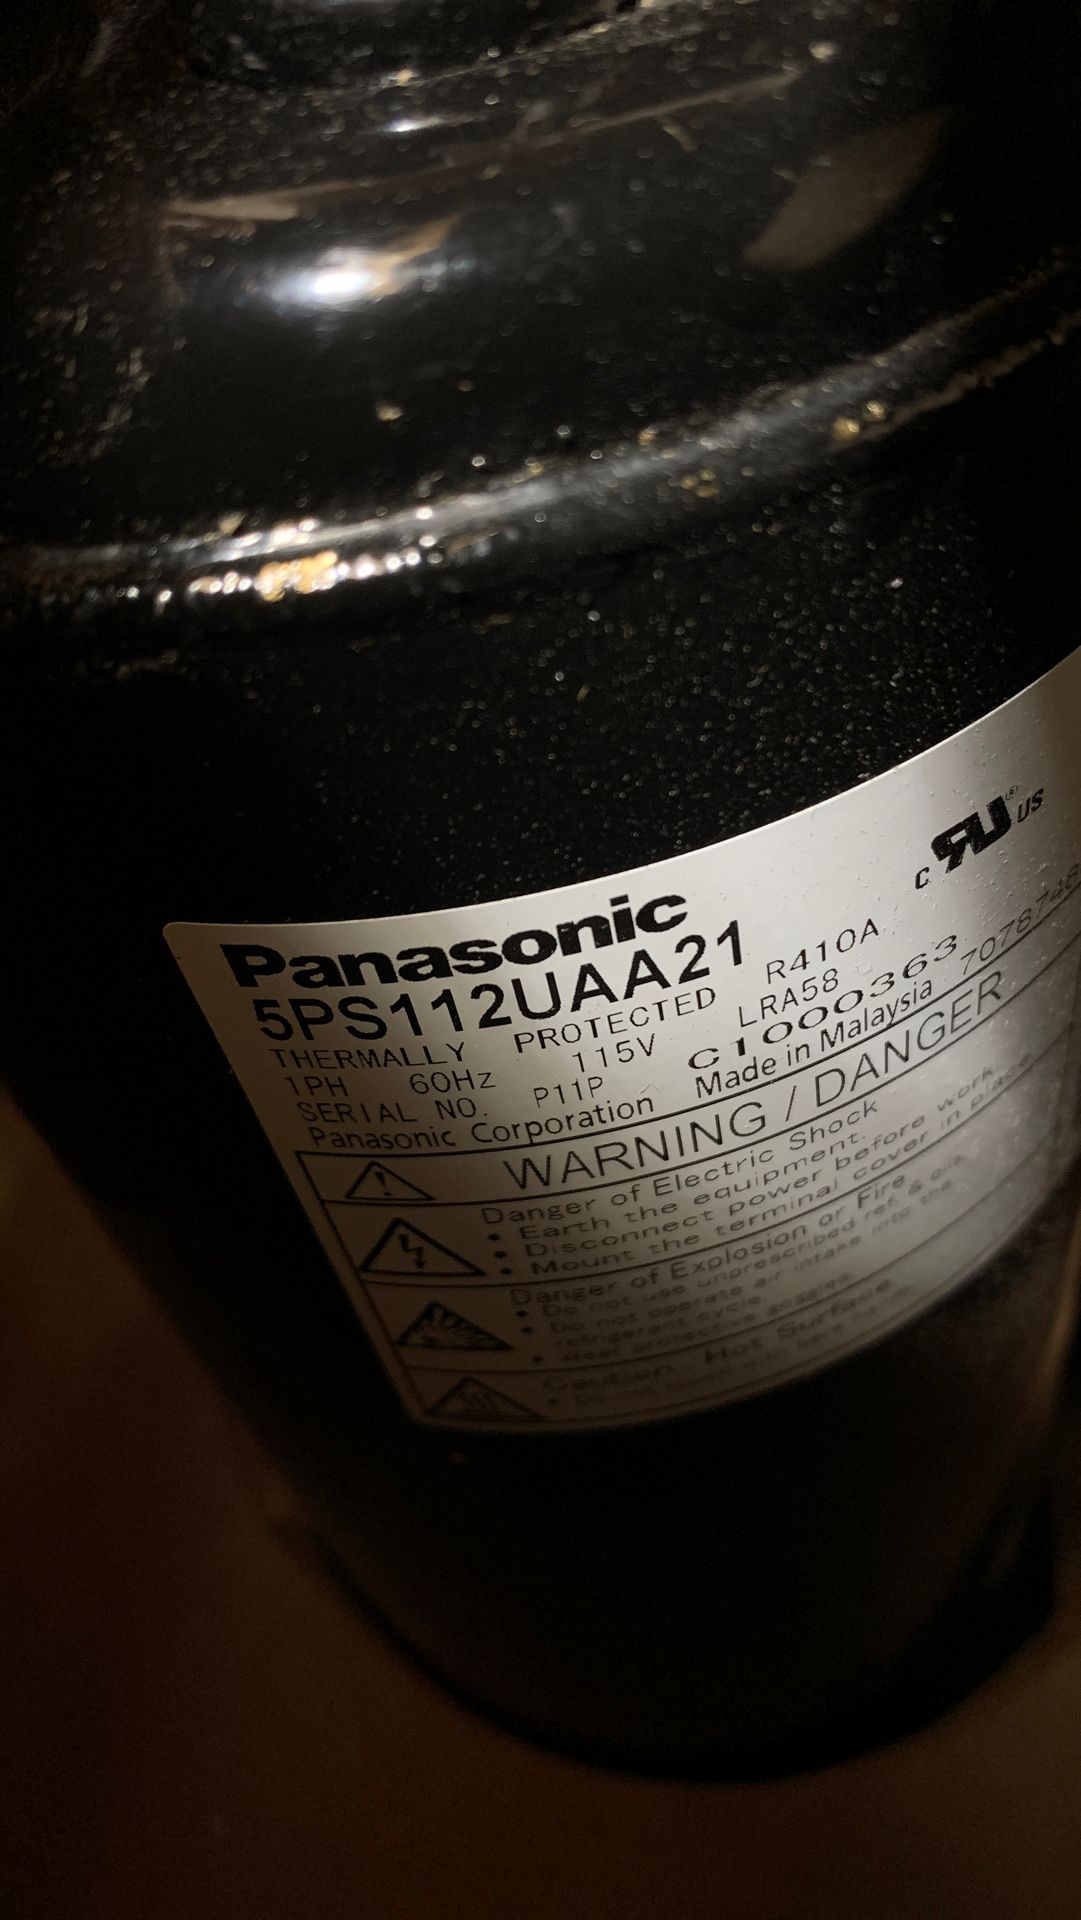 Compressor Panasonic 5PS112UAA21